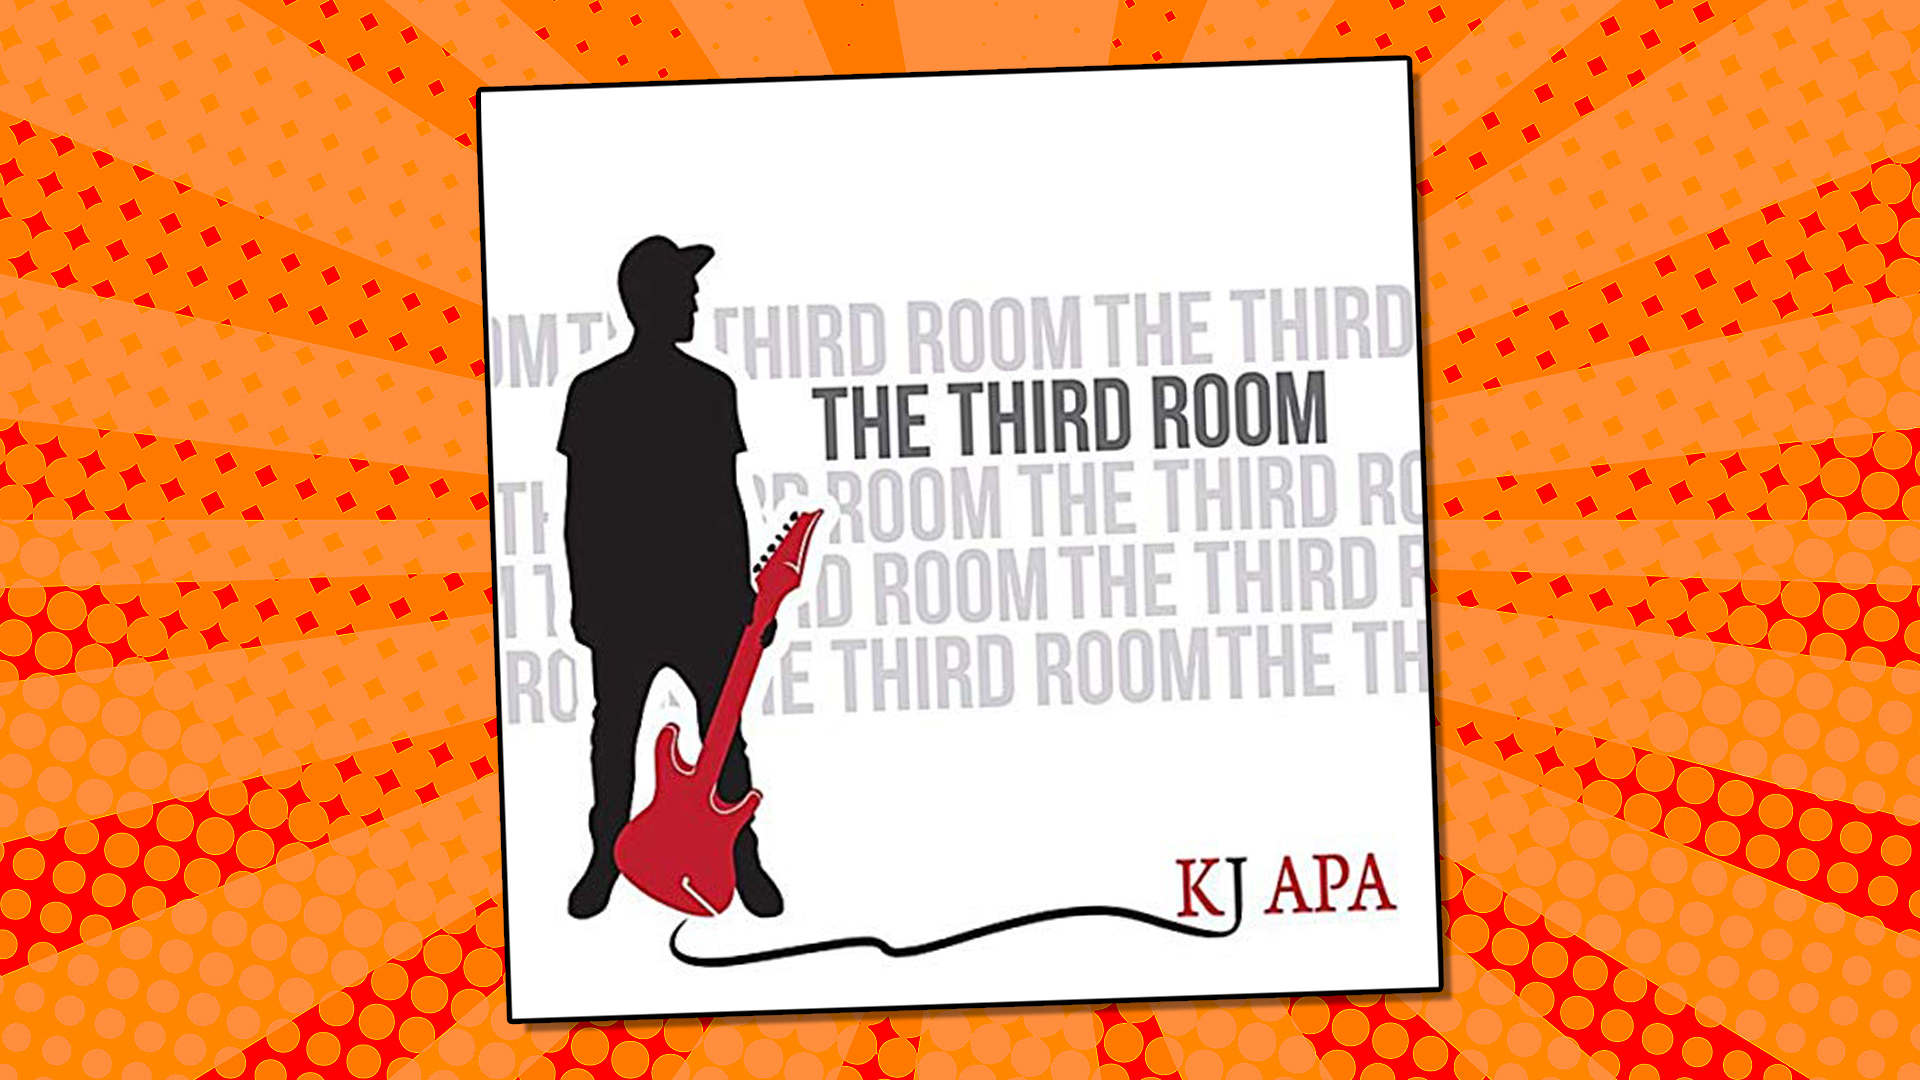 KJ Apa's debut album The Third Room